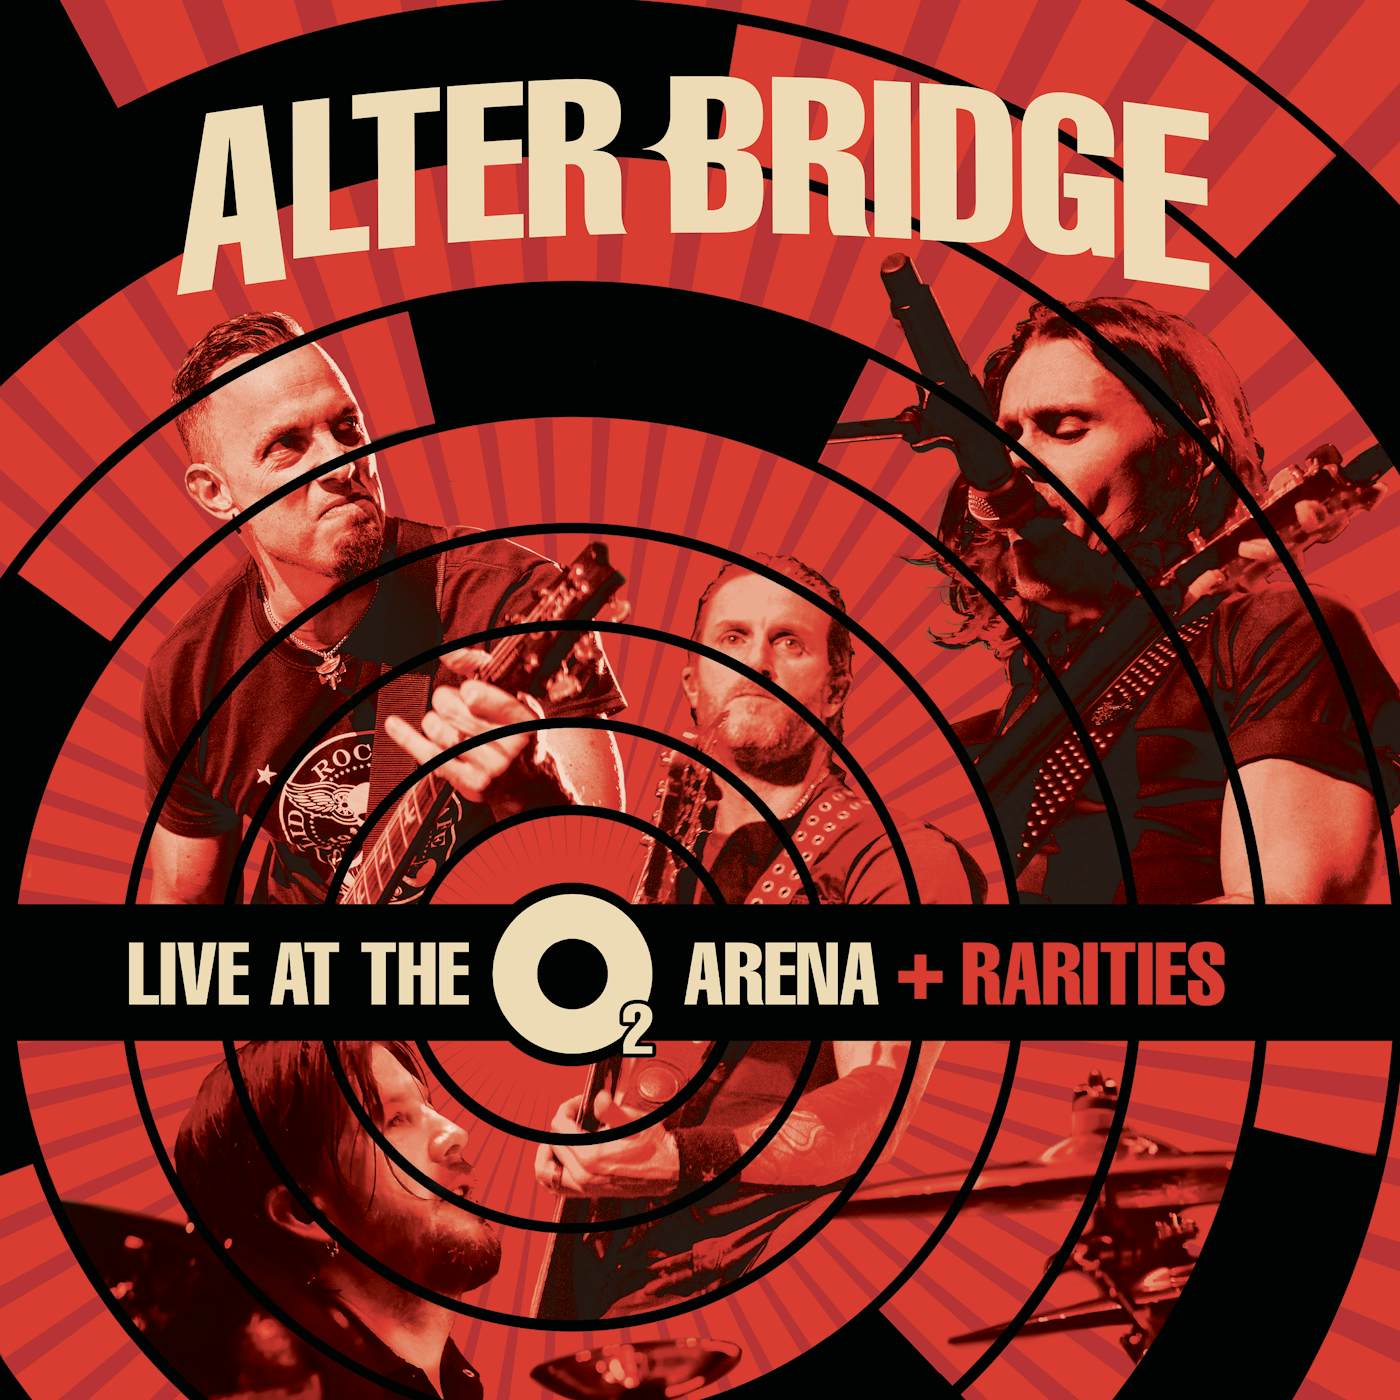 Alter Bridge LIVE AT THE O2 ARENA + RARITIES CD